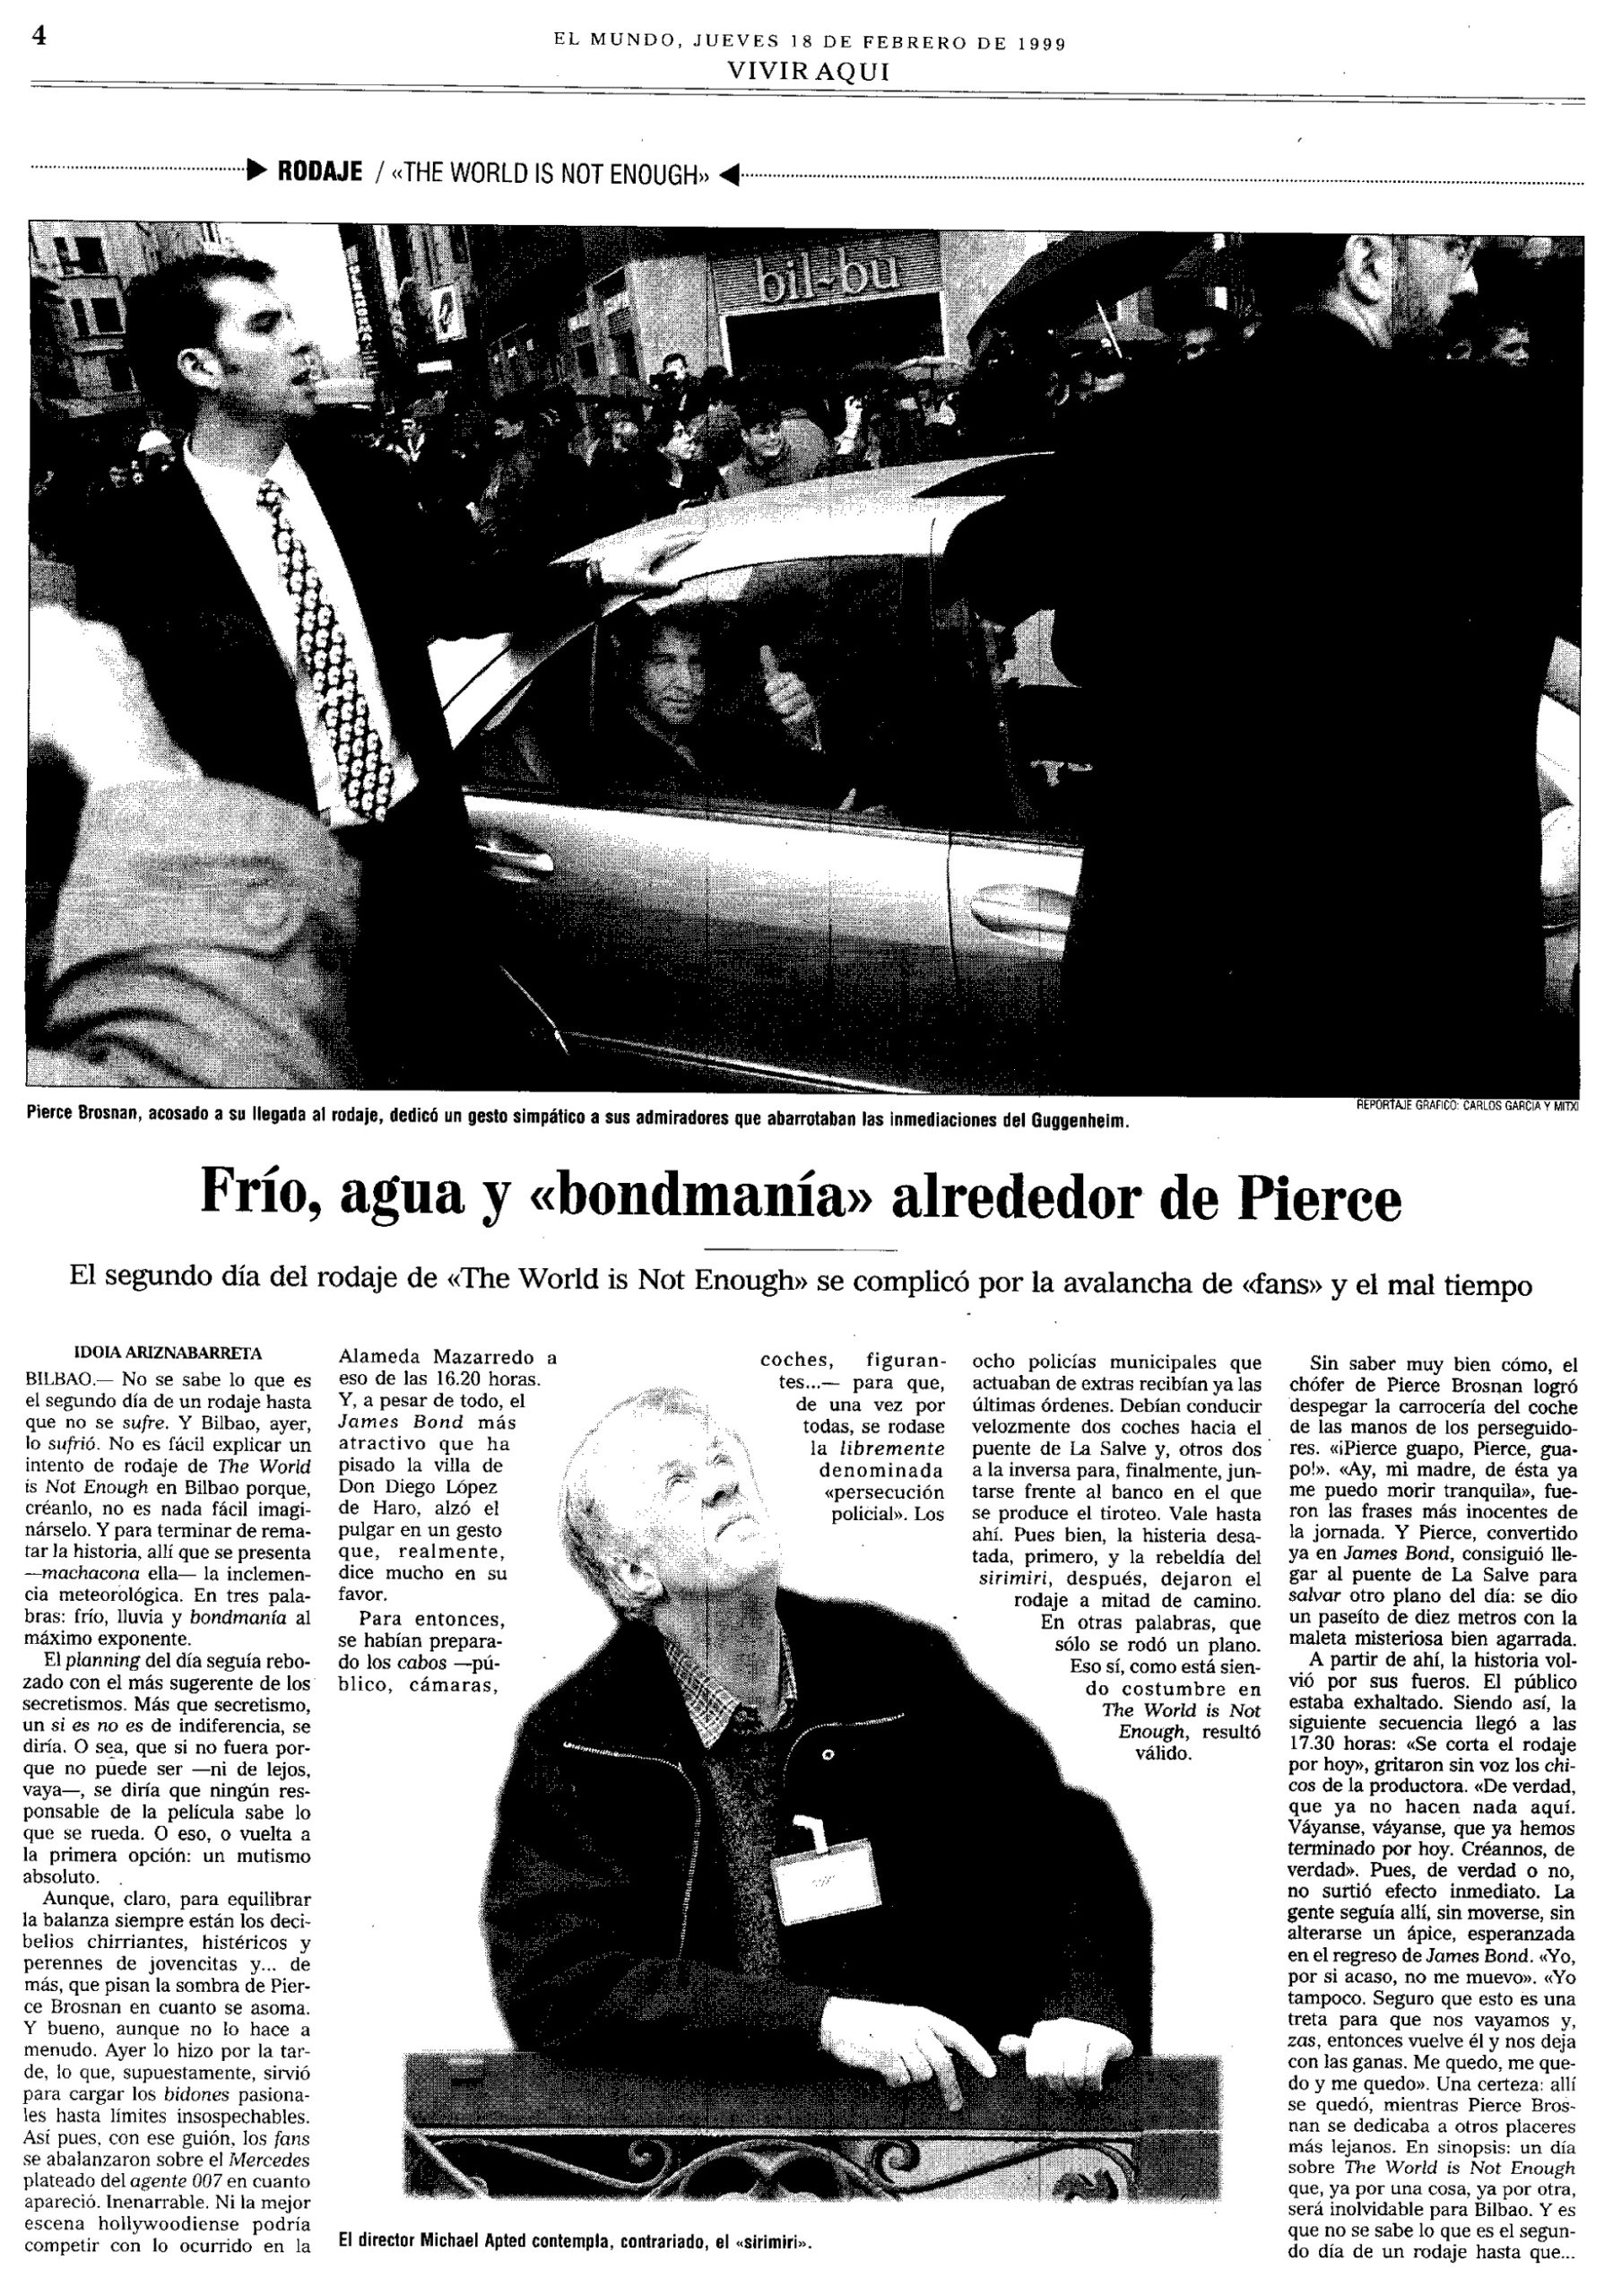 19 1999 02 18 El Mundo Pais Vasco 04 Rodaje Bilbao scaled